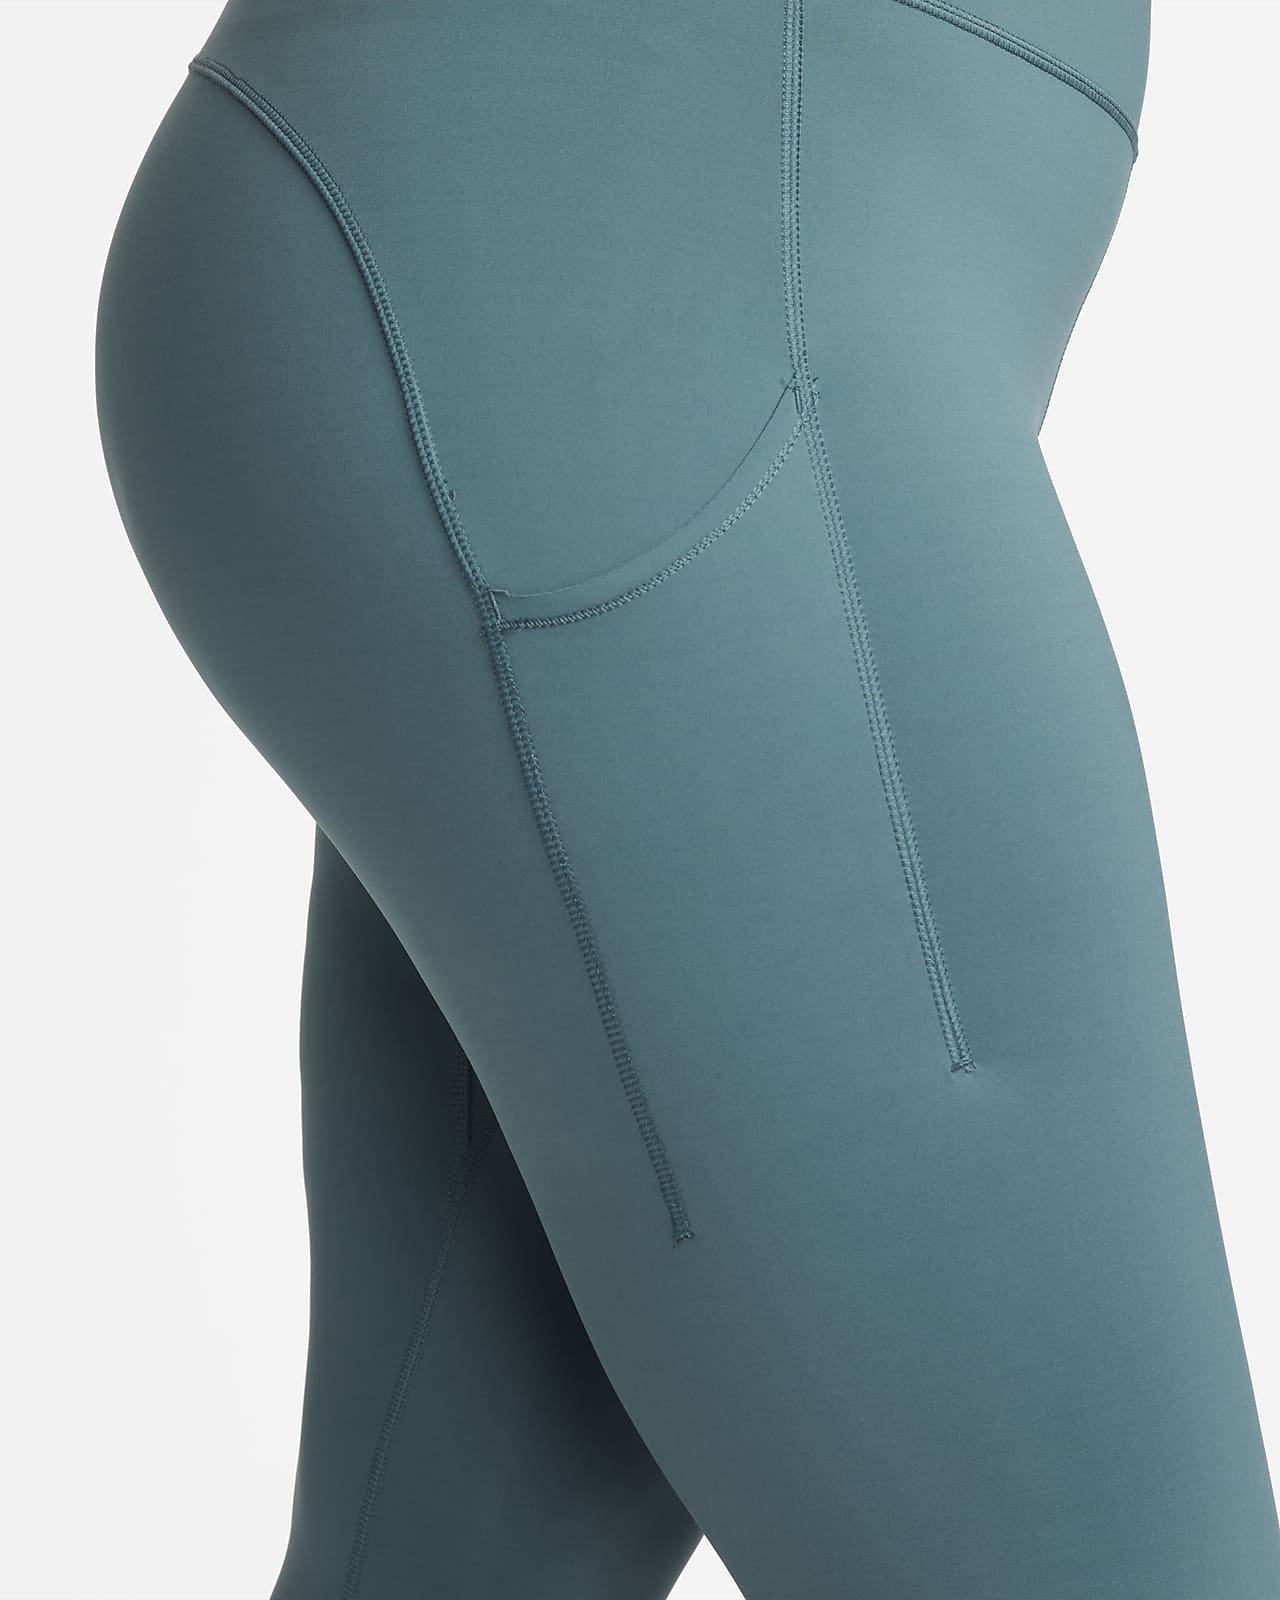 Nike Women's Epic Lux Cropped Running Tights, Zen Print, XL